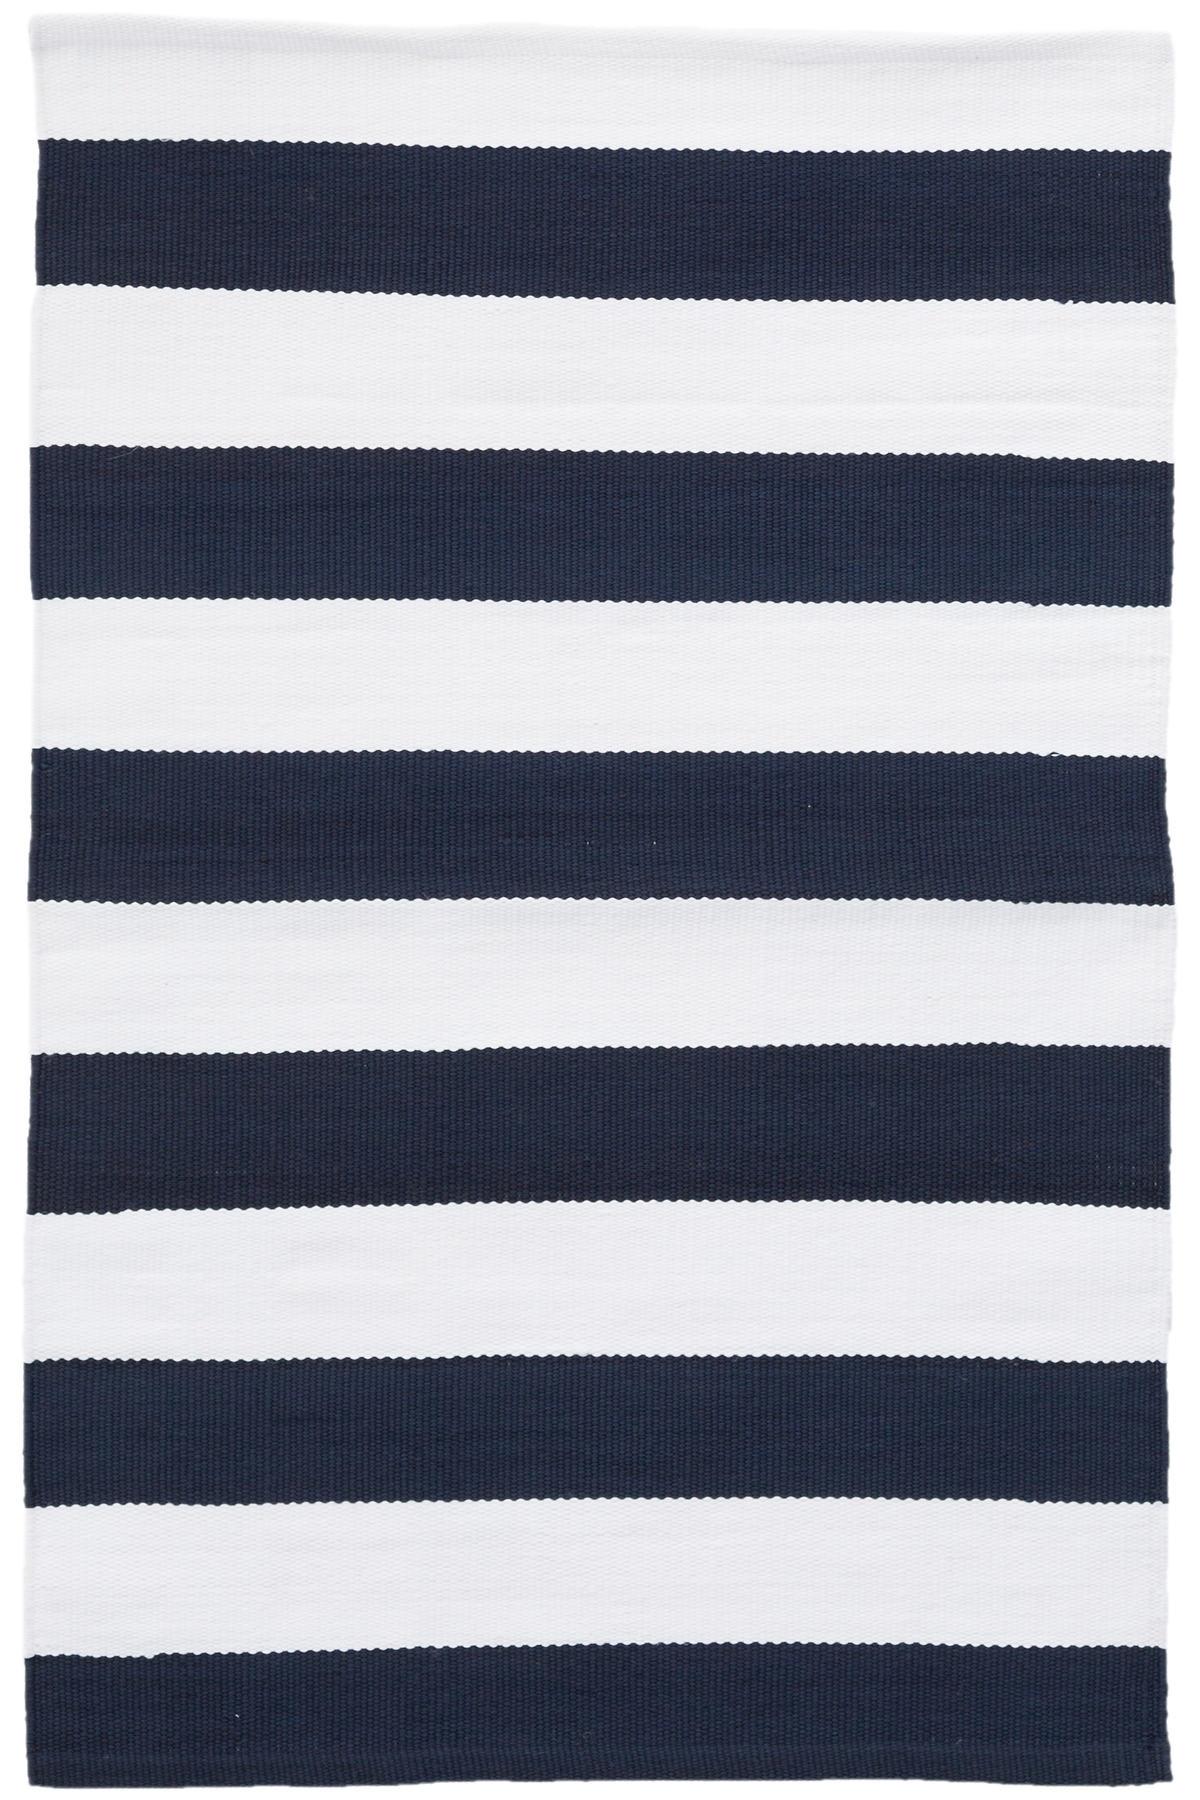 Catamaran Stripe Navy White Indoor, Navy And White Striped Rug